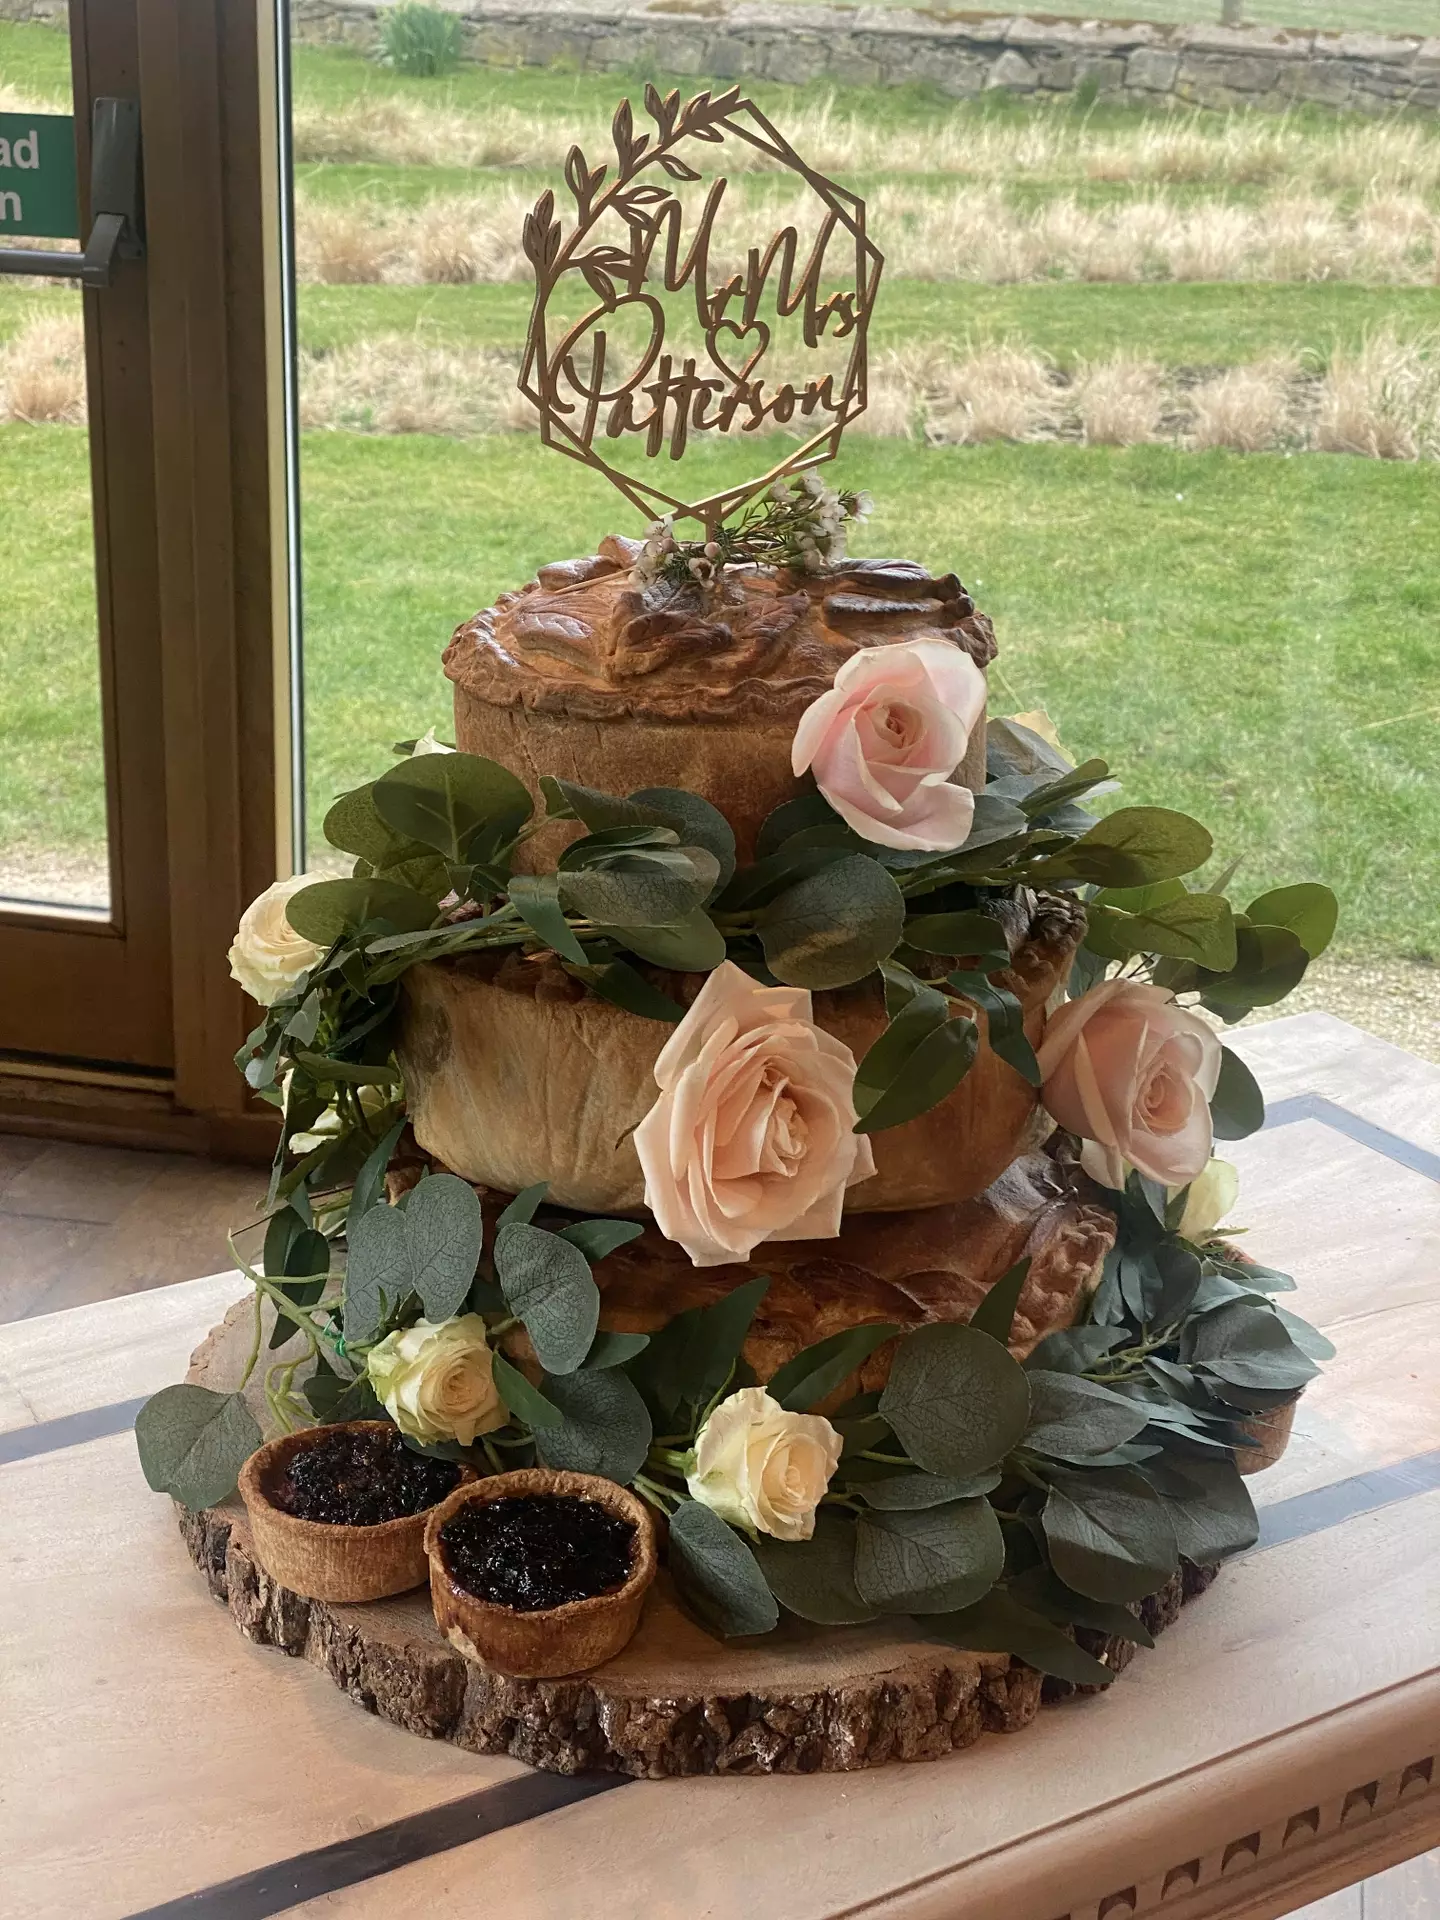 The couple chose a unique wedding cake (